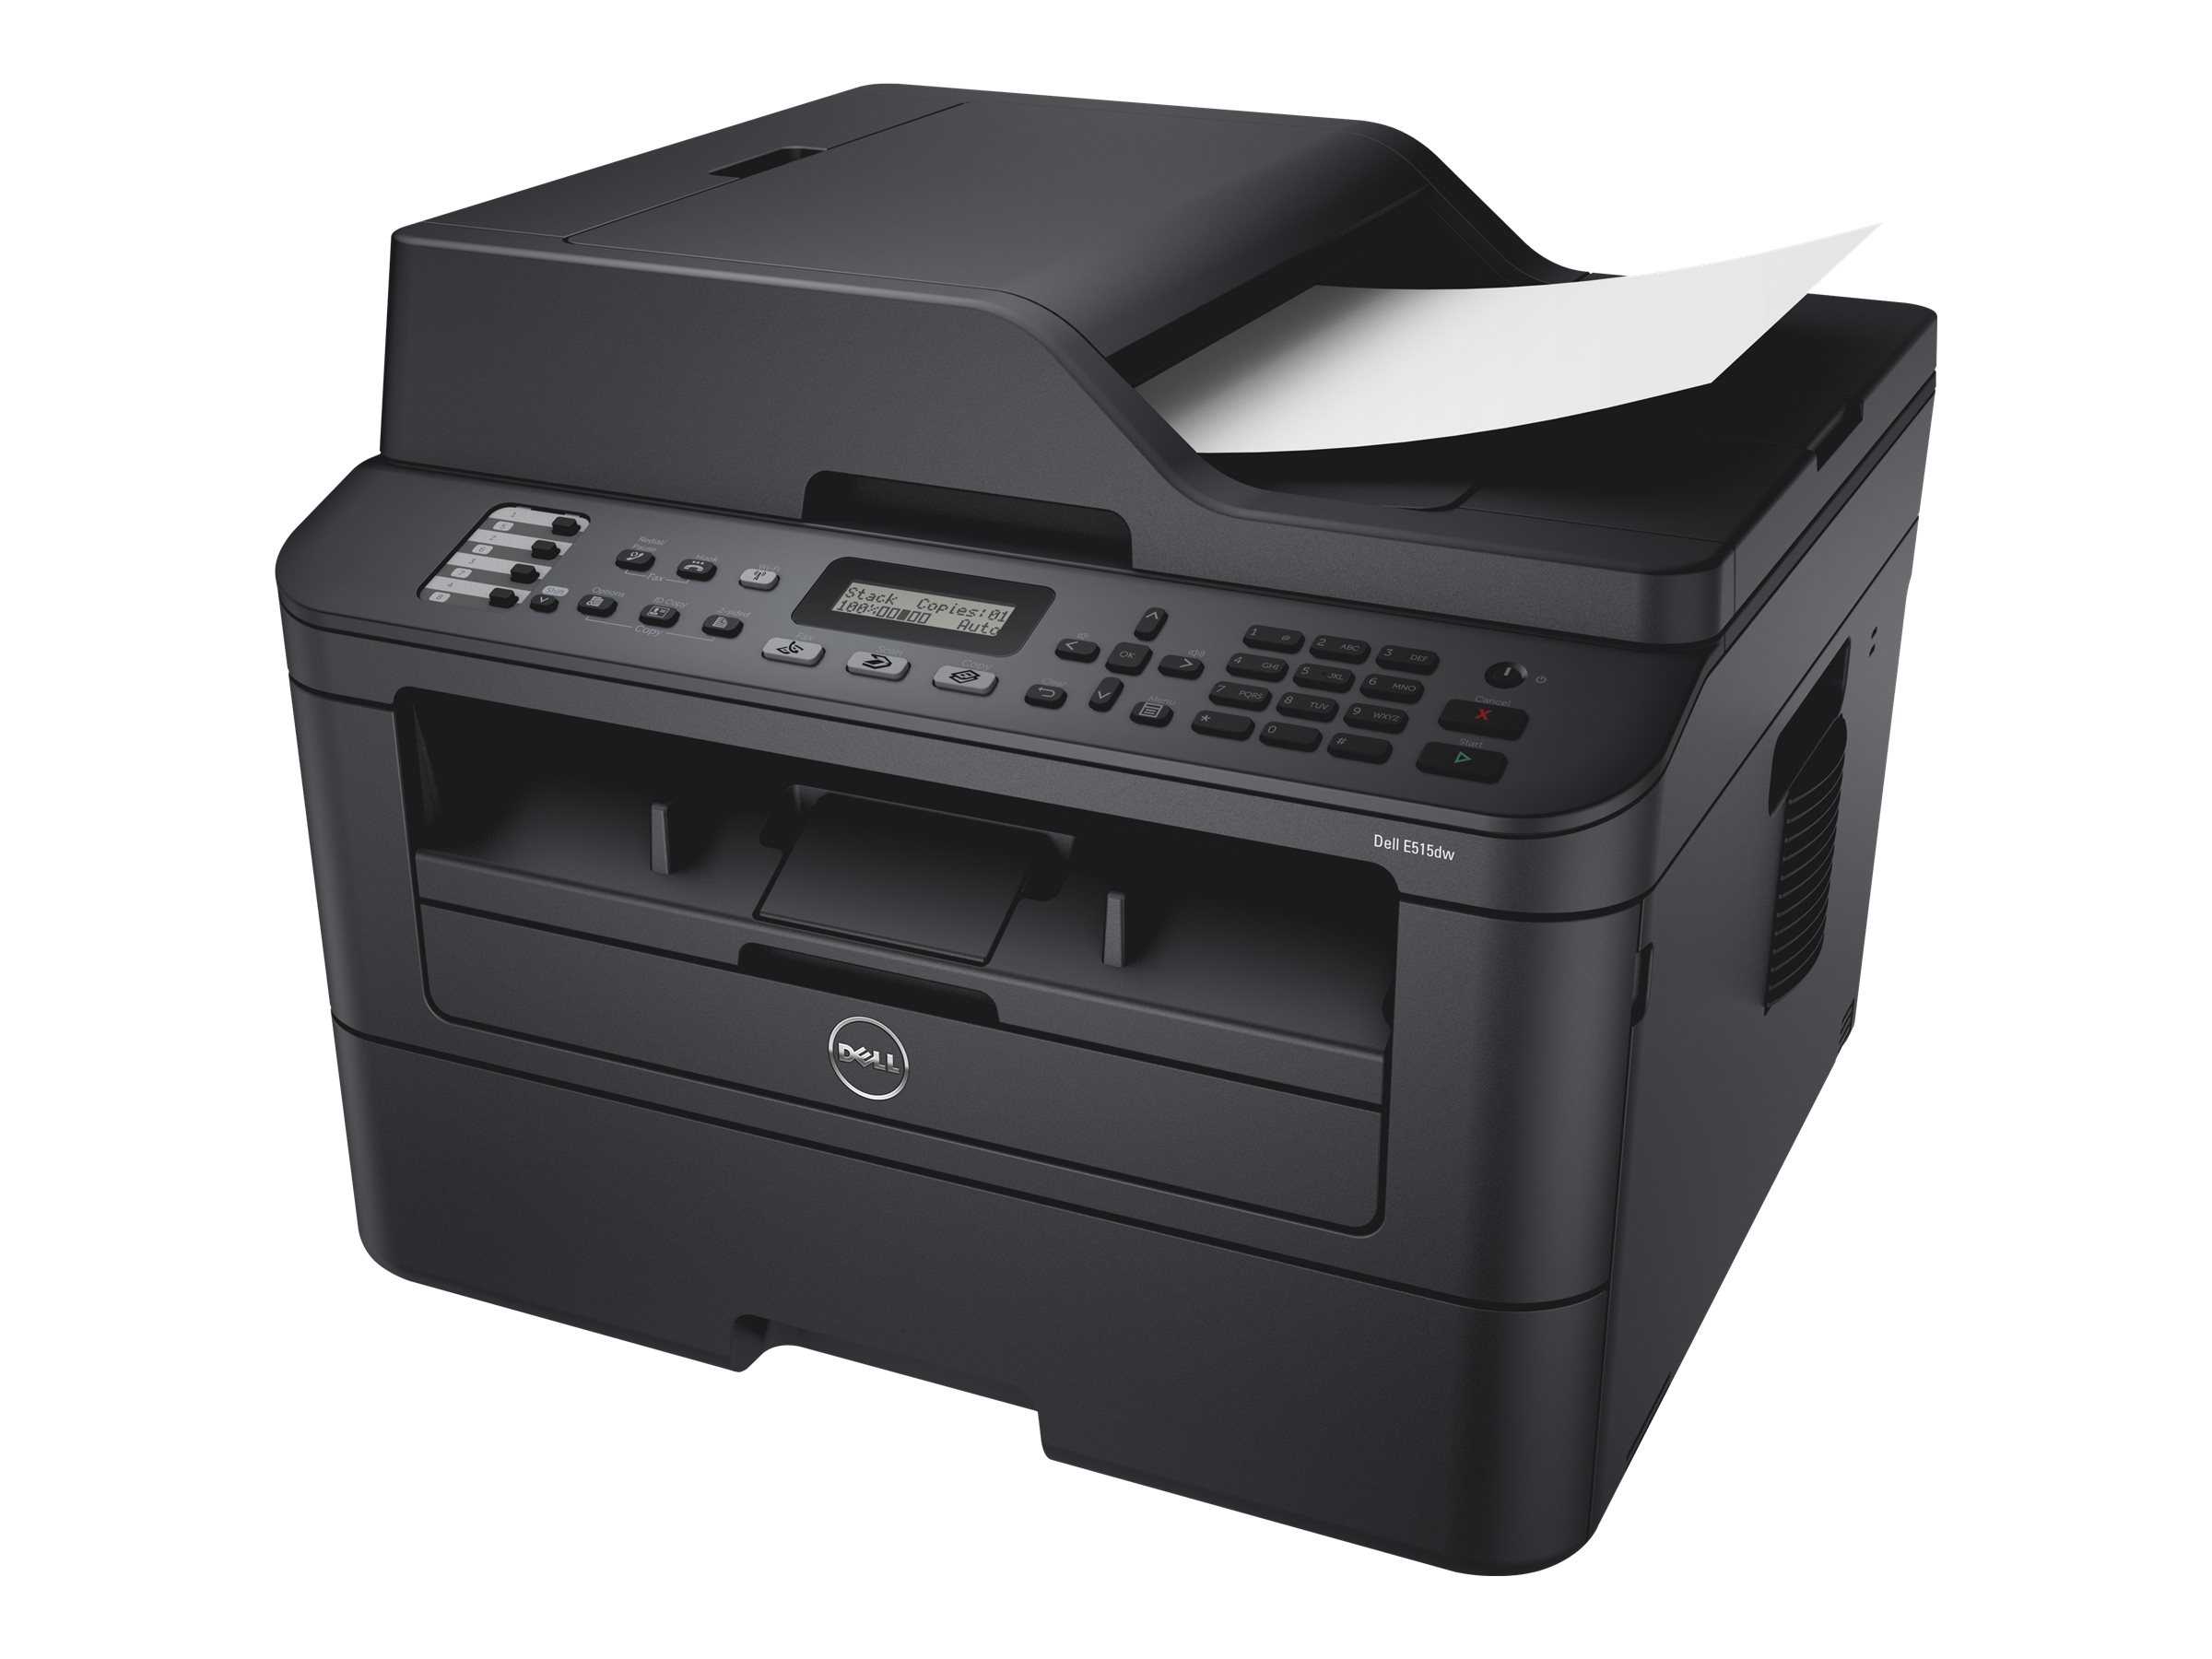 E515dw Multifunction Printer